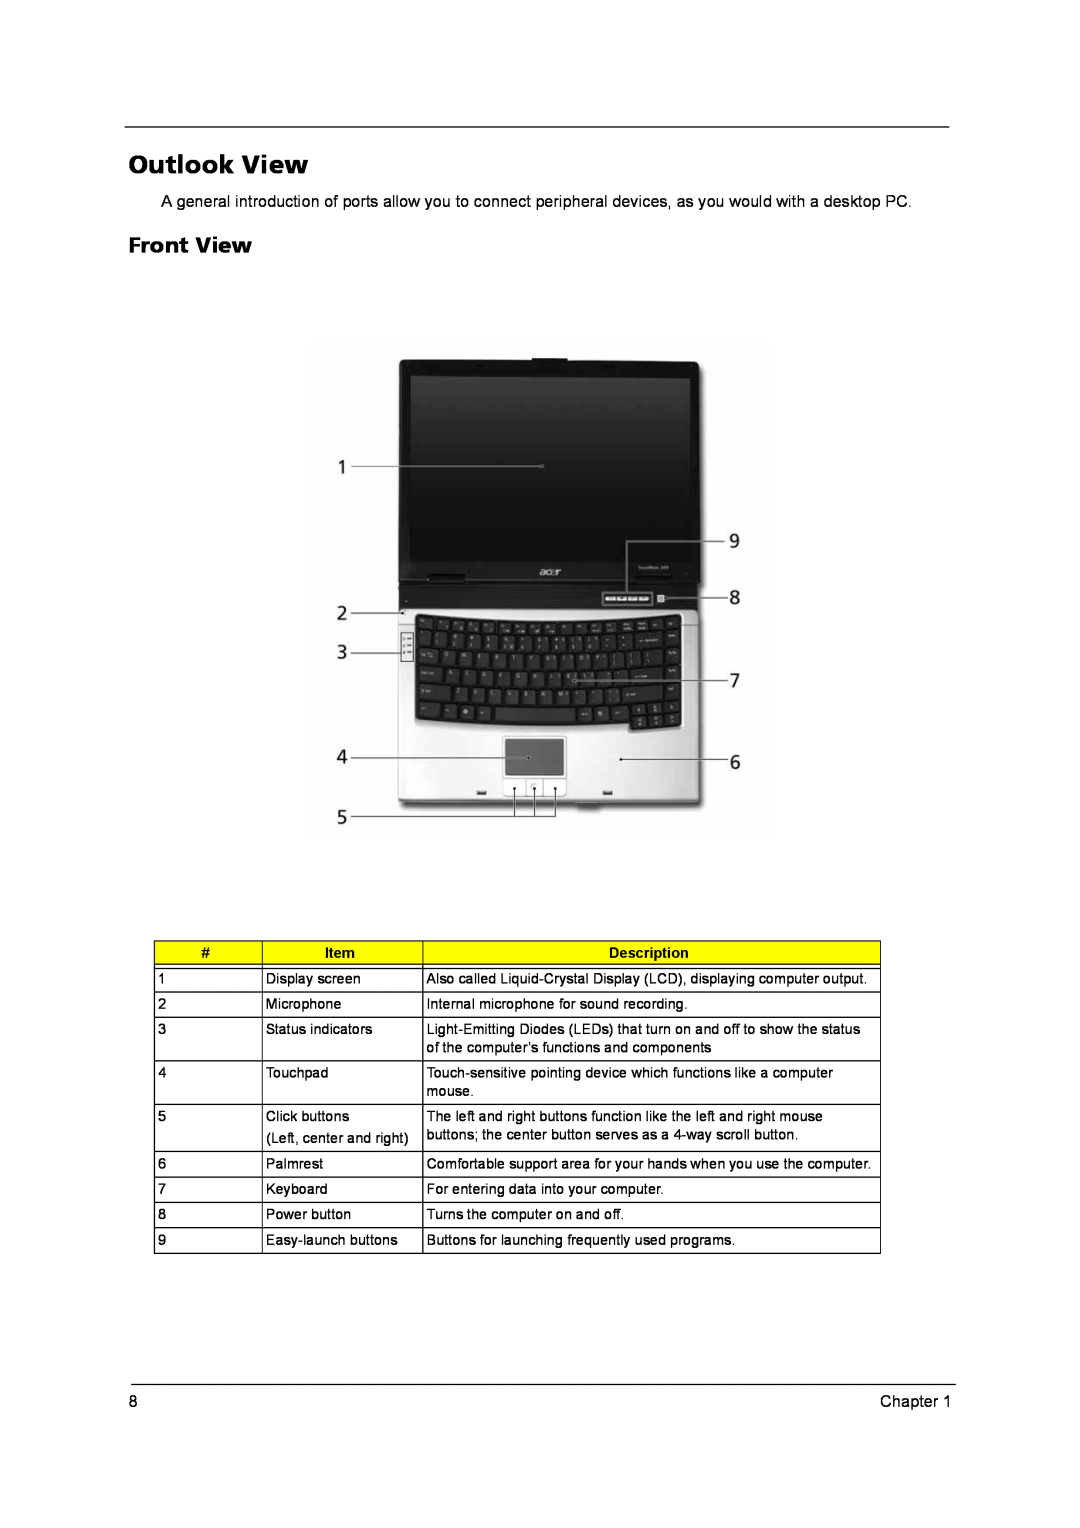 Acer N141C1-L02 (WXGA+), QD14TL0102, PLUTO MK6025GAS, MK4025GAS, N141I1-L05 (GLARE) Outlook View, Front View, Description 